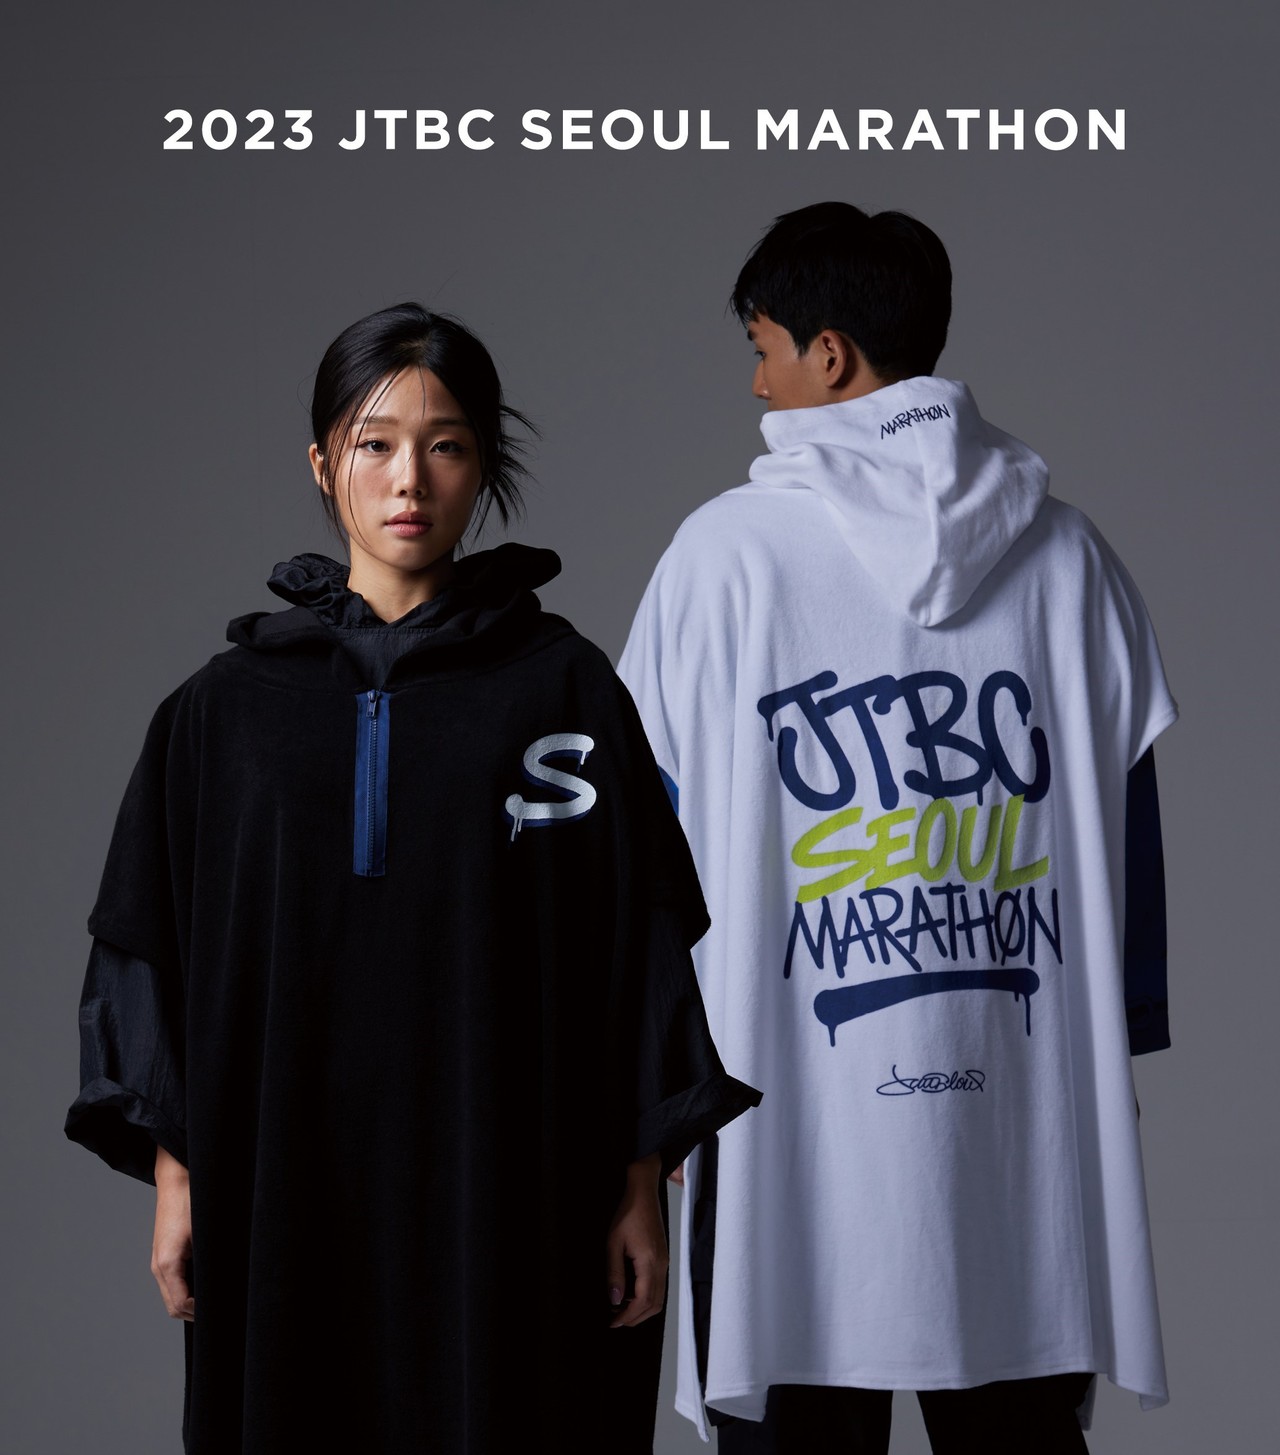 ▲JTBC 서울마라톤 25회 기념 '스페셜에디션' 상품 중 로브 상품 출처 : 러너블 